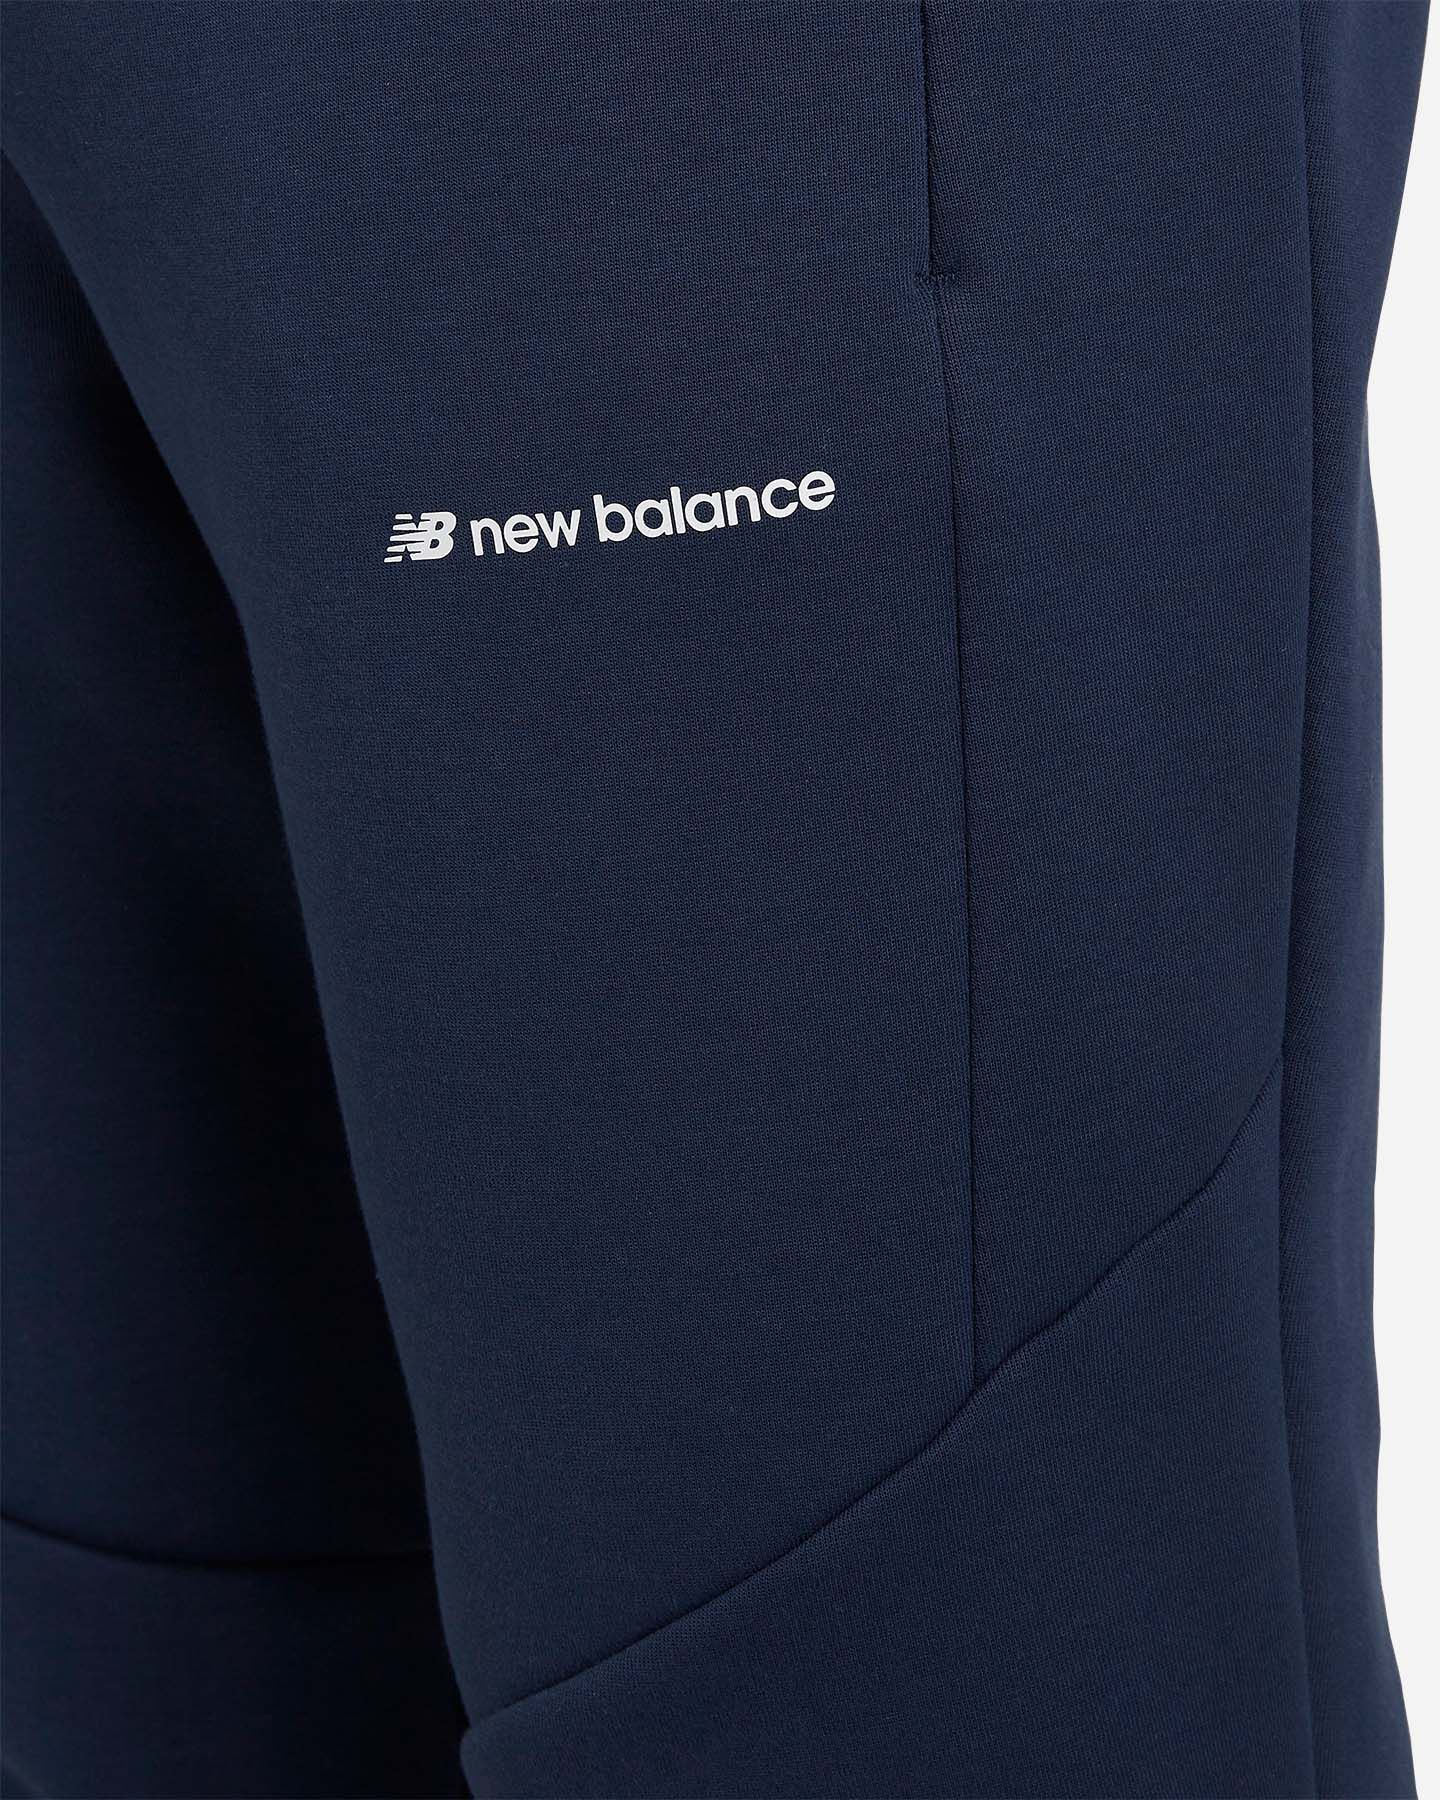  Pantalone NEW BALANCE CORE SLIM M S5166132|-|S* scatto 3